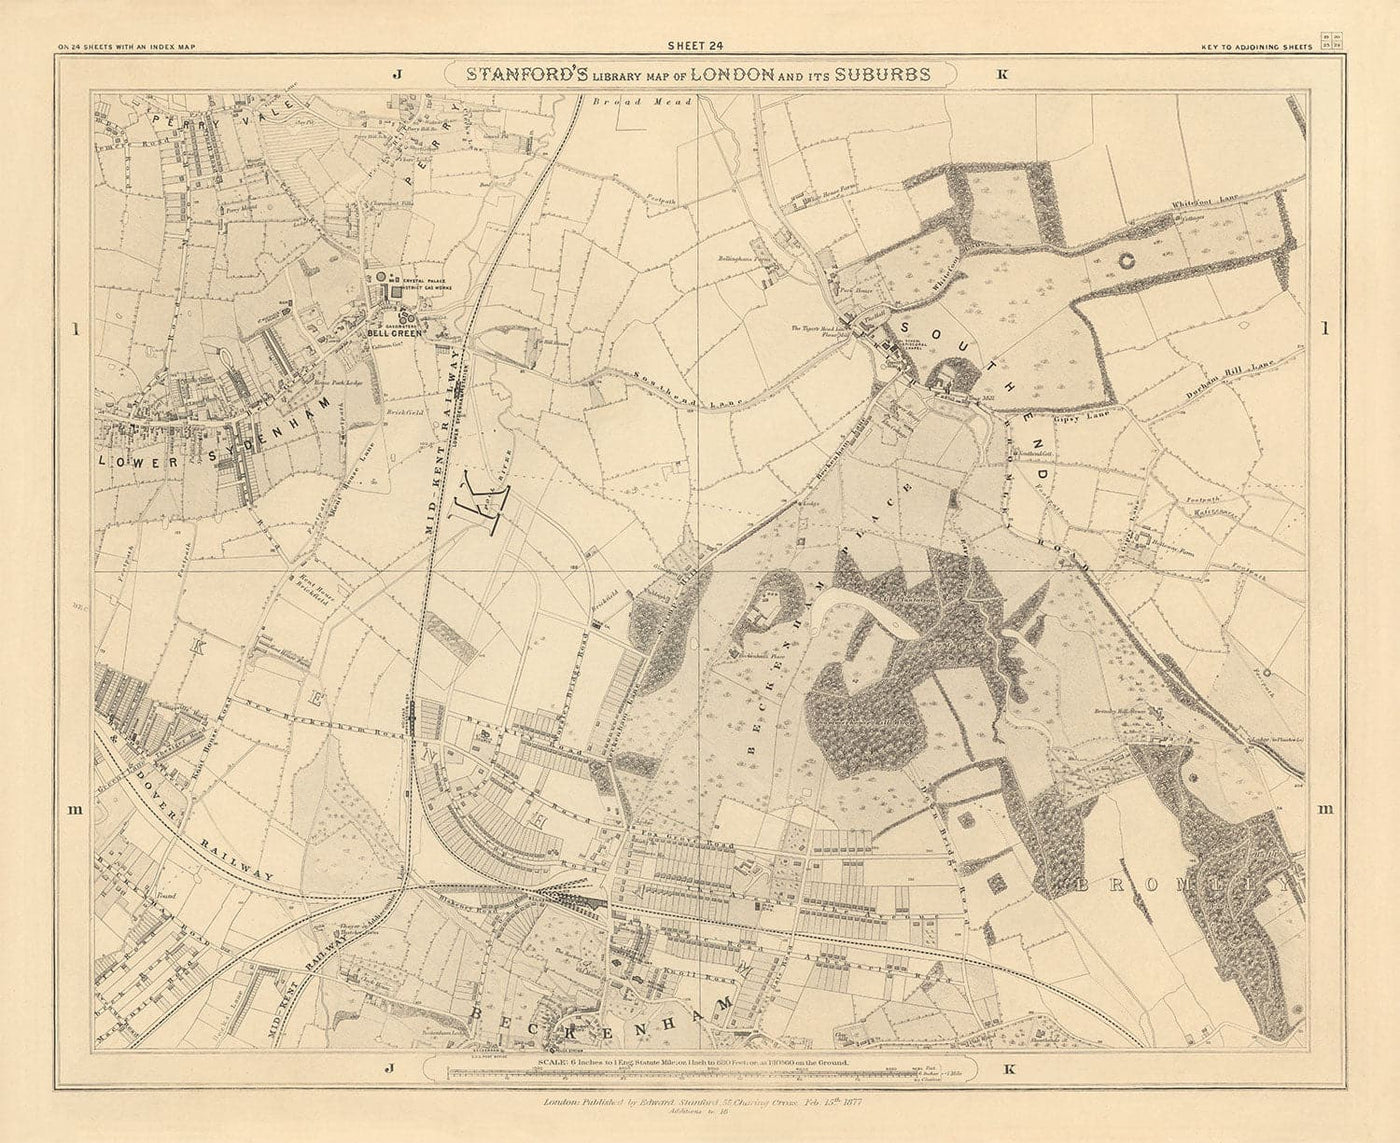 Old Map of South East London, 1862 by Edward Stanford - Bromley, Beckenham, Sydenham, Southend, Downham - SE26, SE6, BR1, BR2